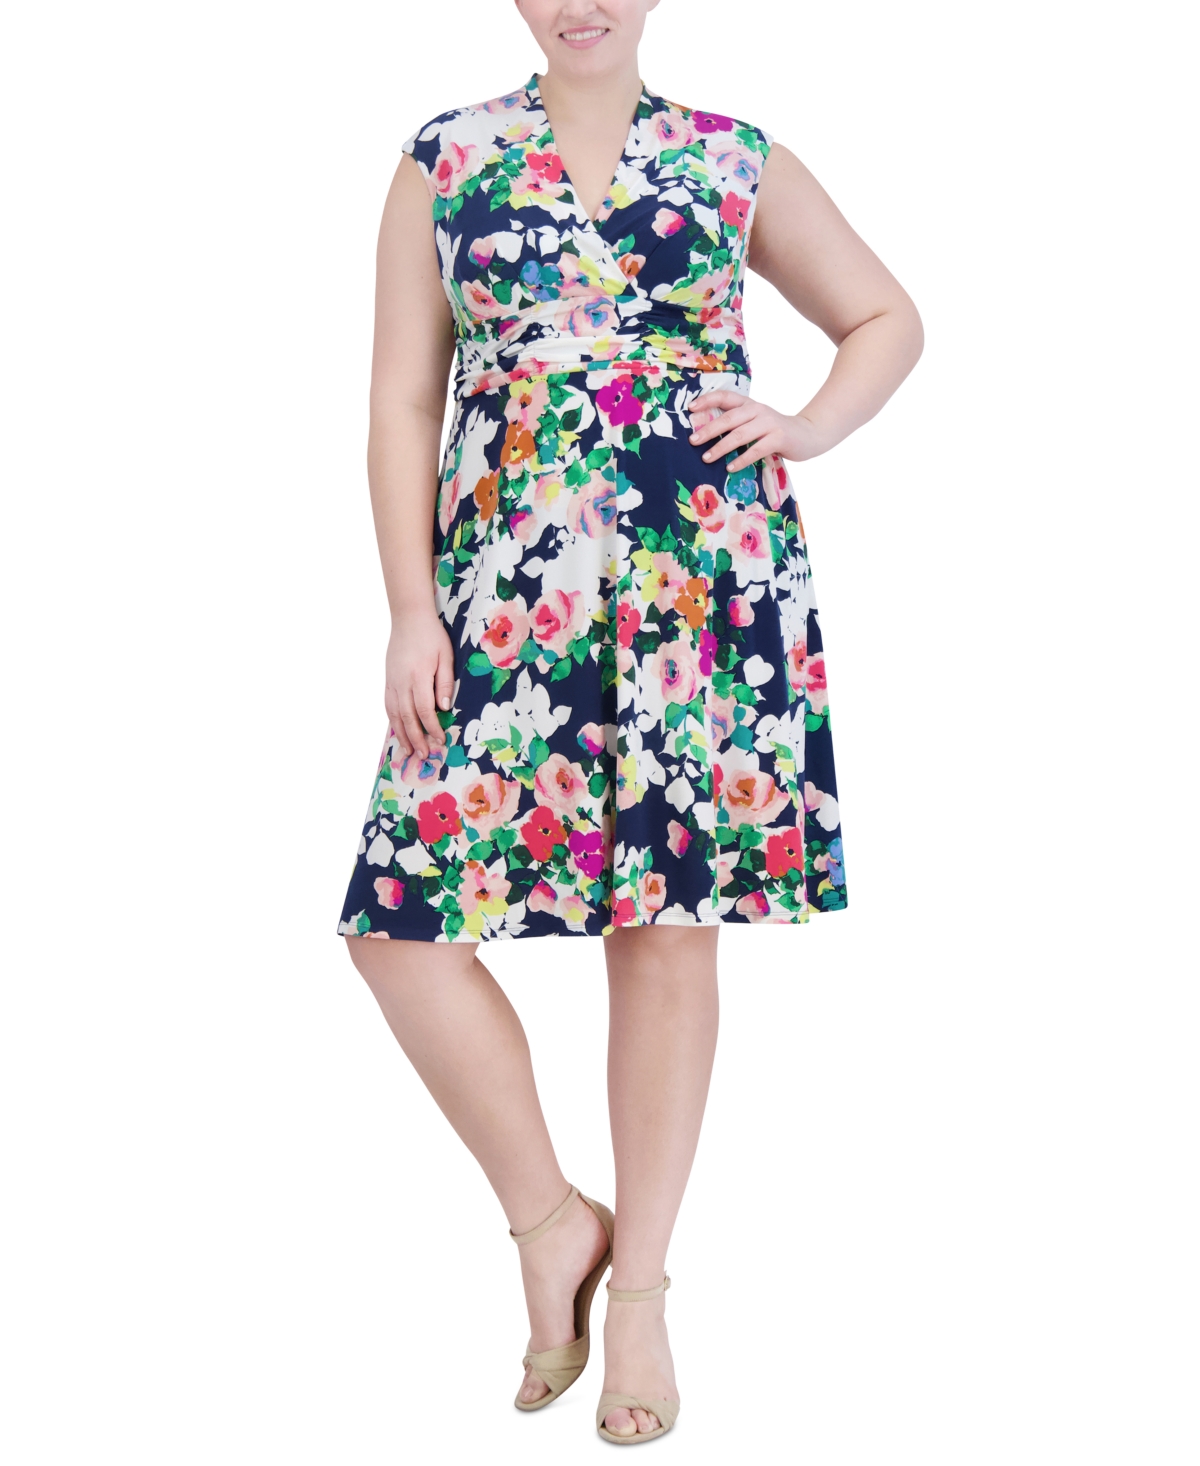 Plus Size Floral Surplice-Neck Dress - Navy/Ivory